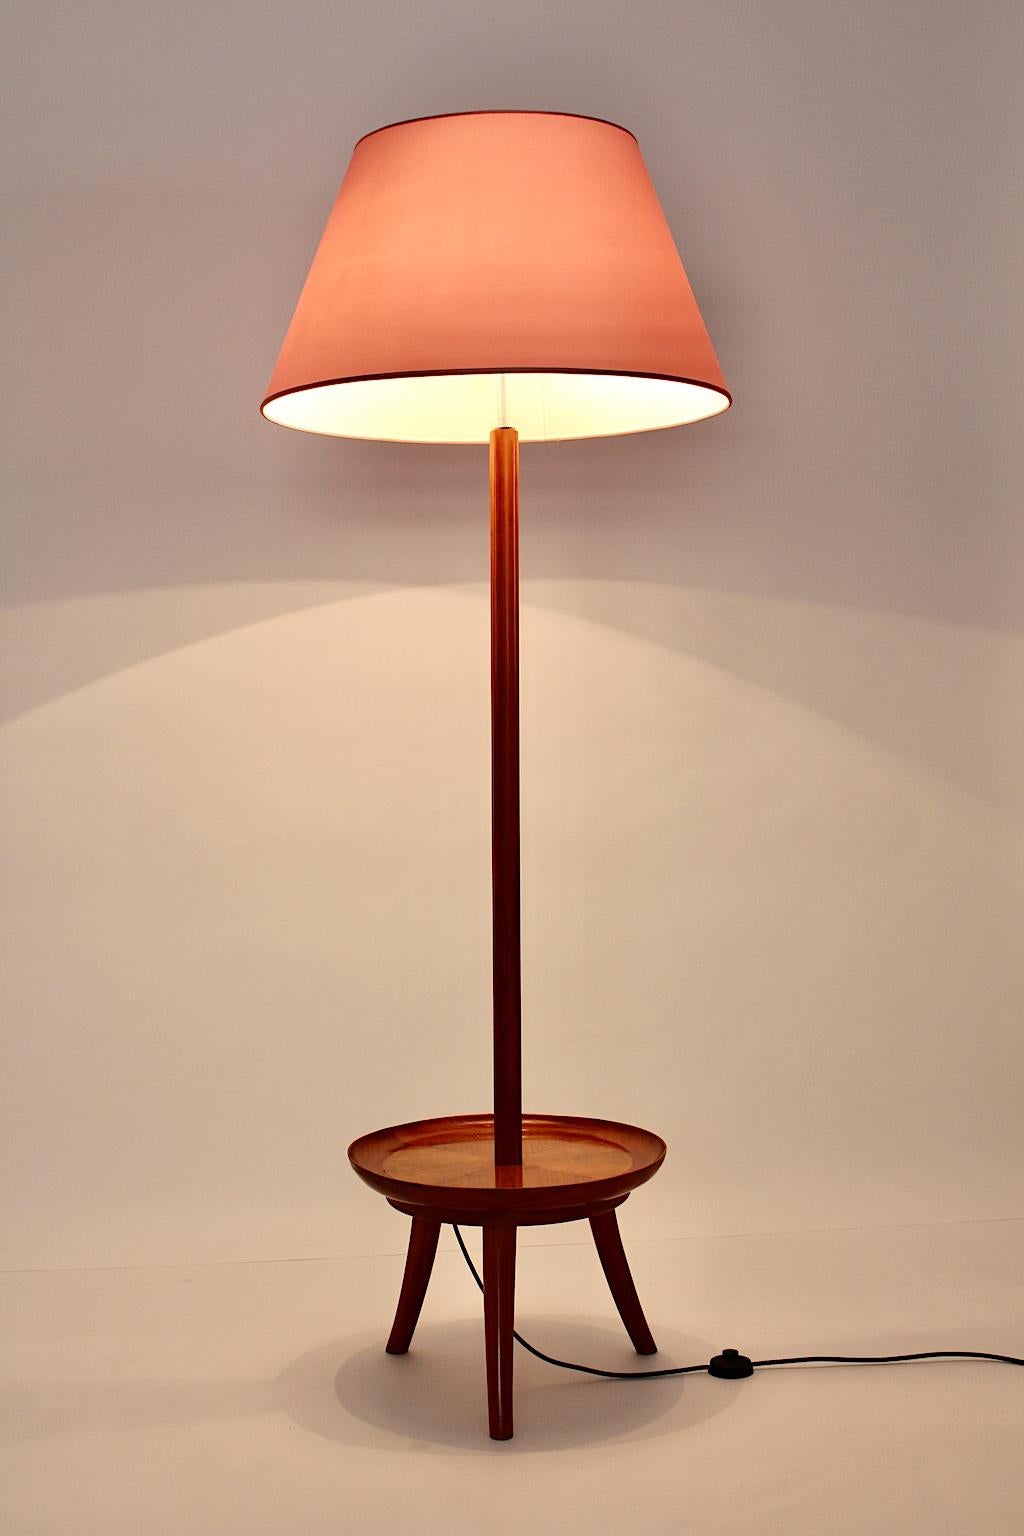 vintage floor lamp table